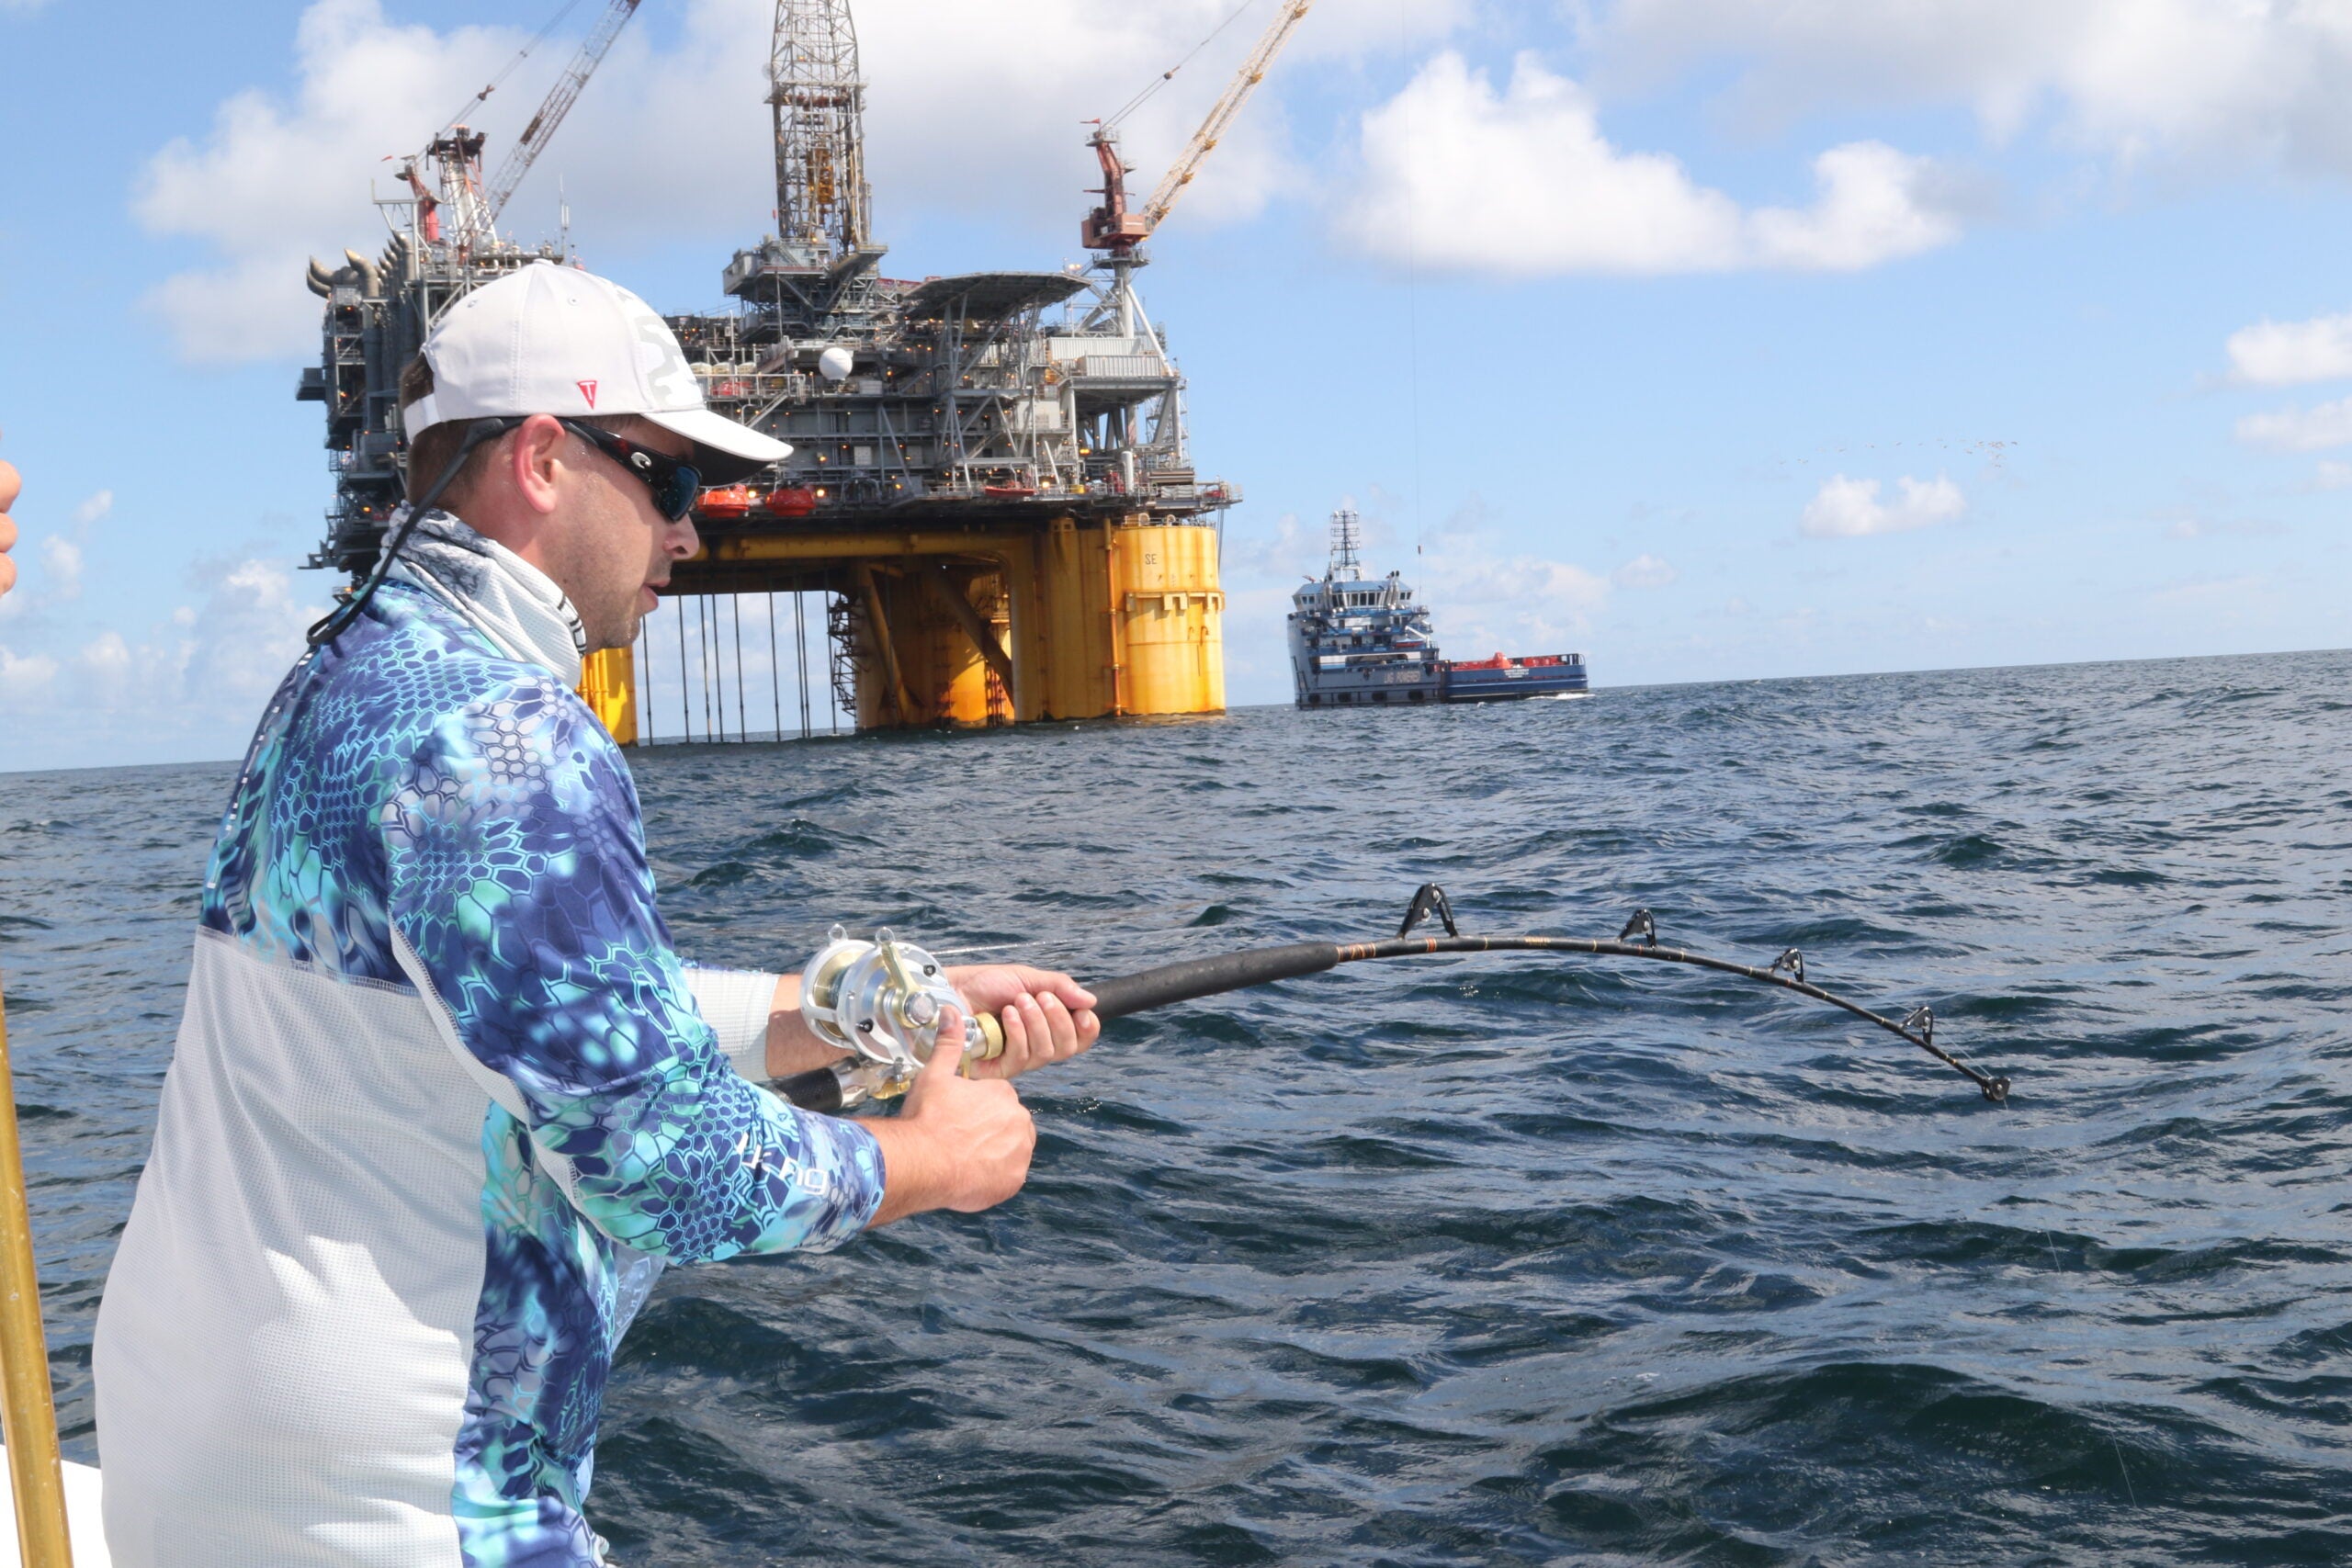 yellowfin tuna fishing next to oil rig